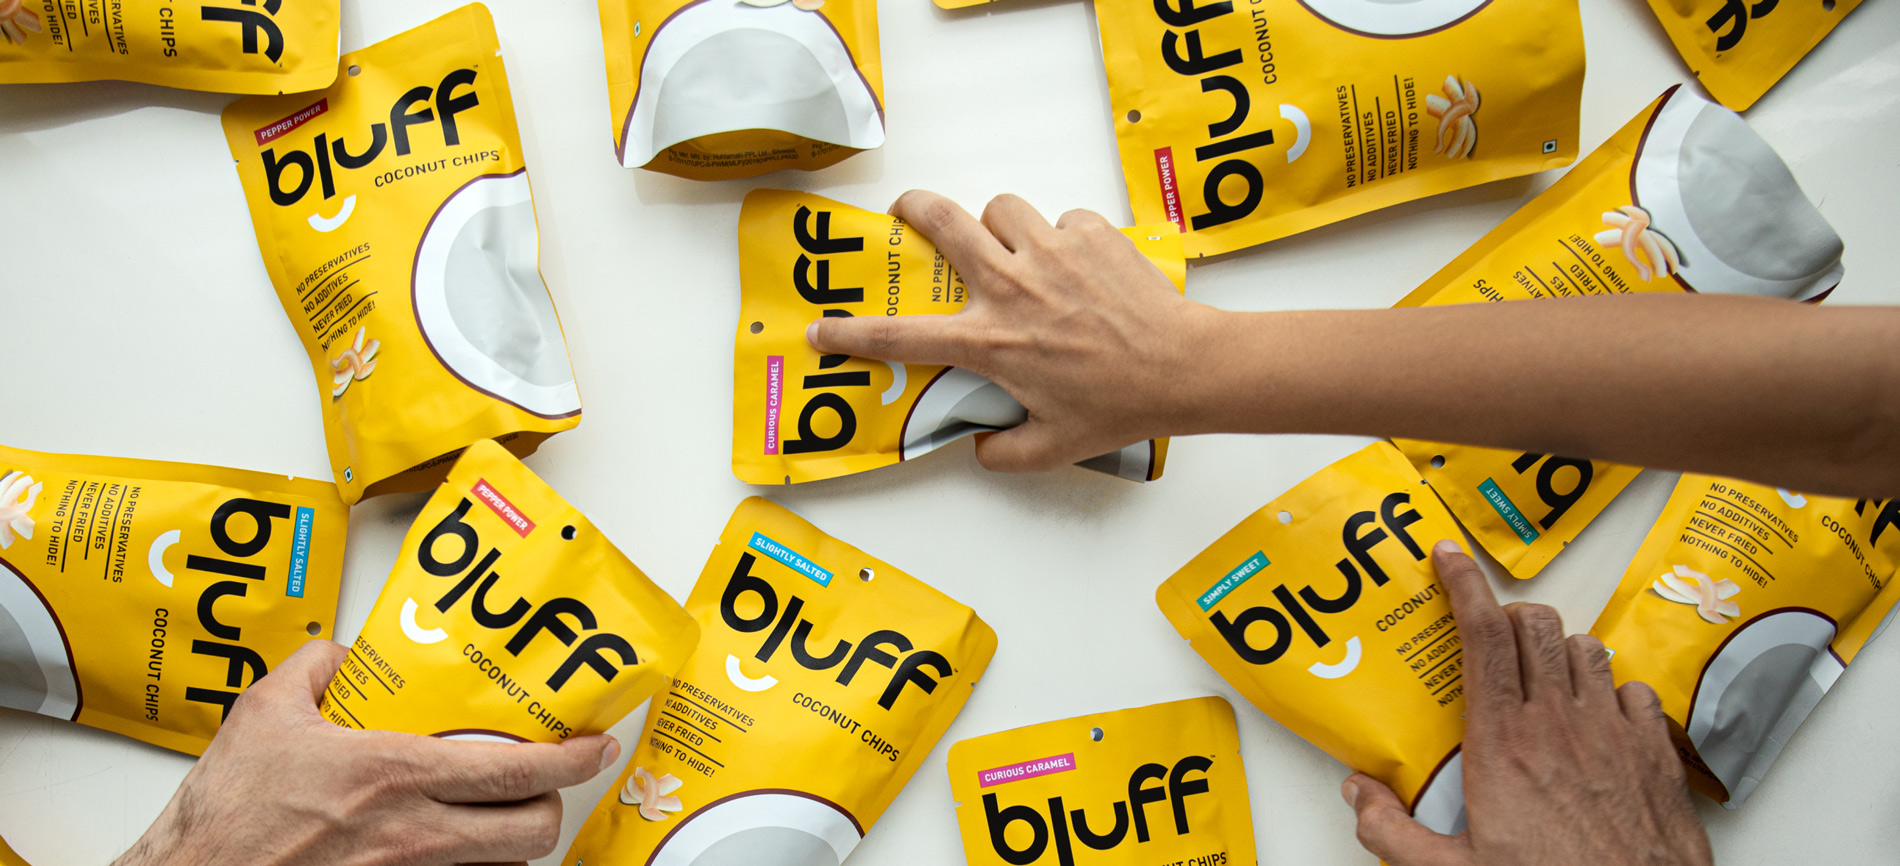 Bluff Snacks: Identity and Communication